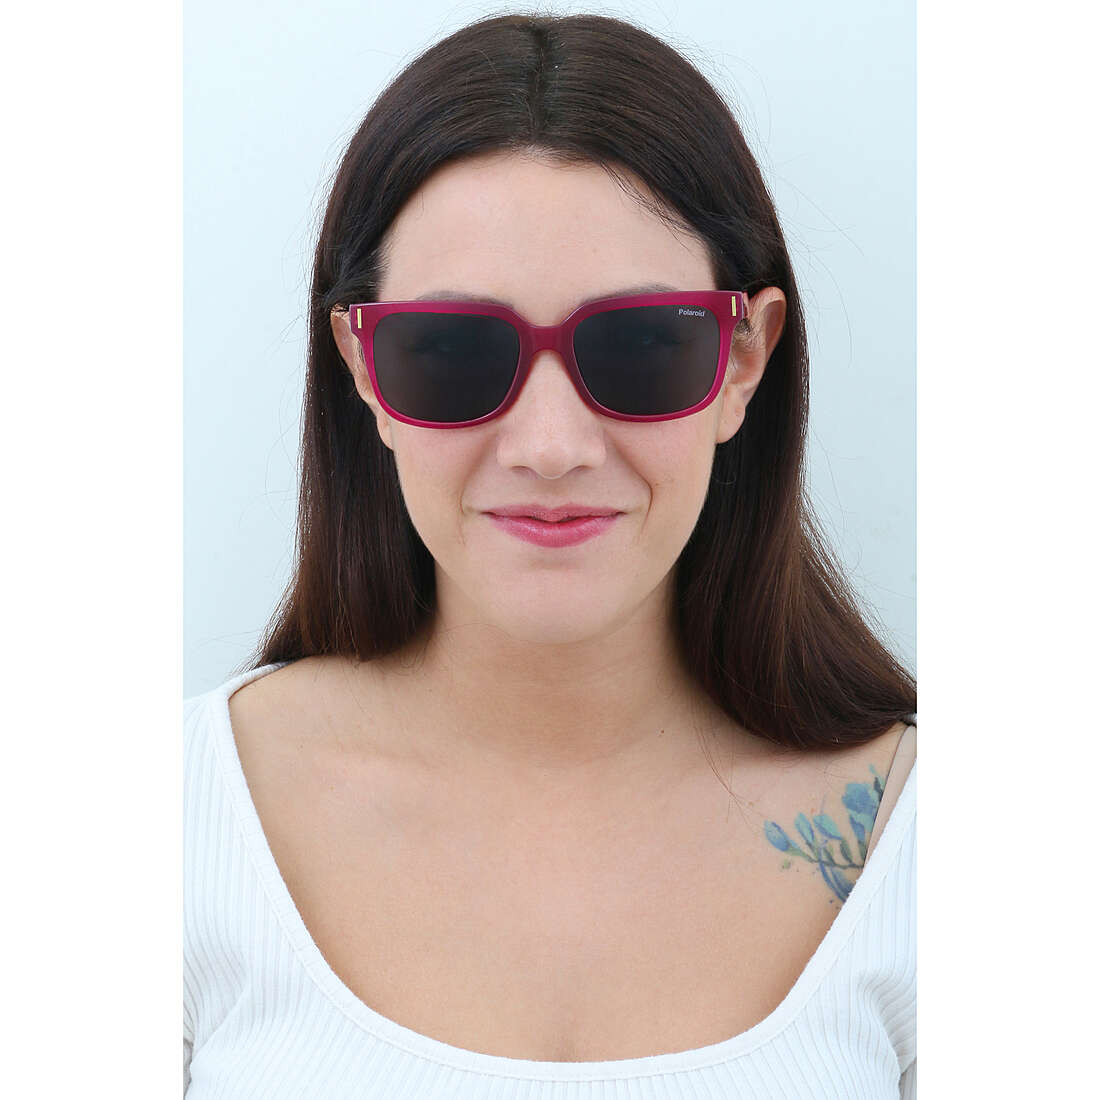 Polaroid occhiali da sole Cool unisex 205688MU154M9 indosso